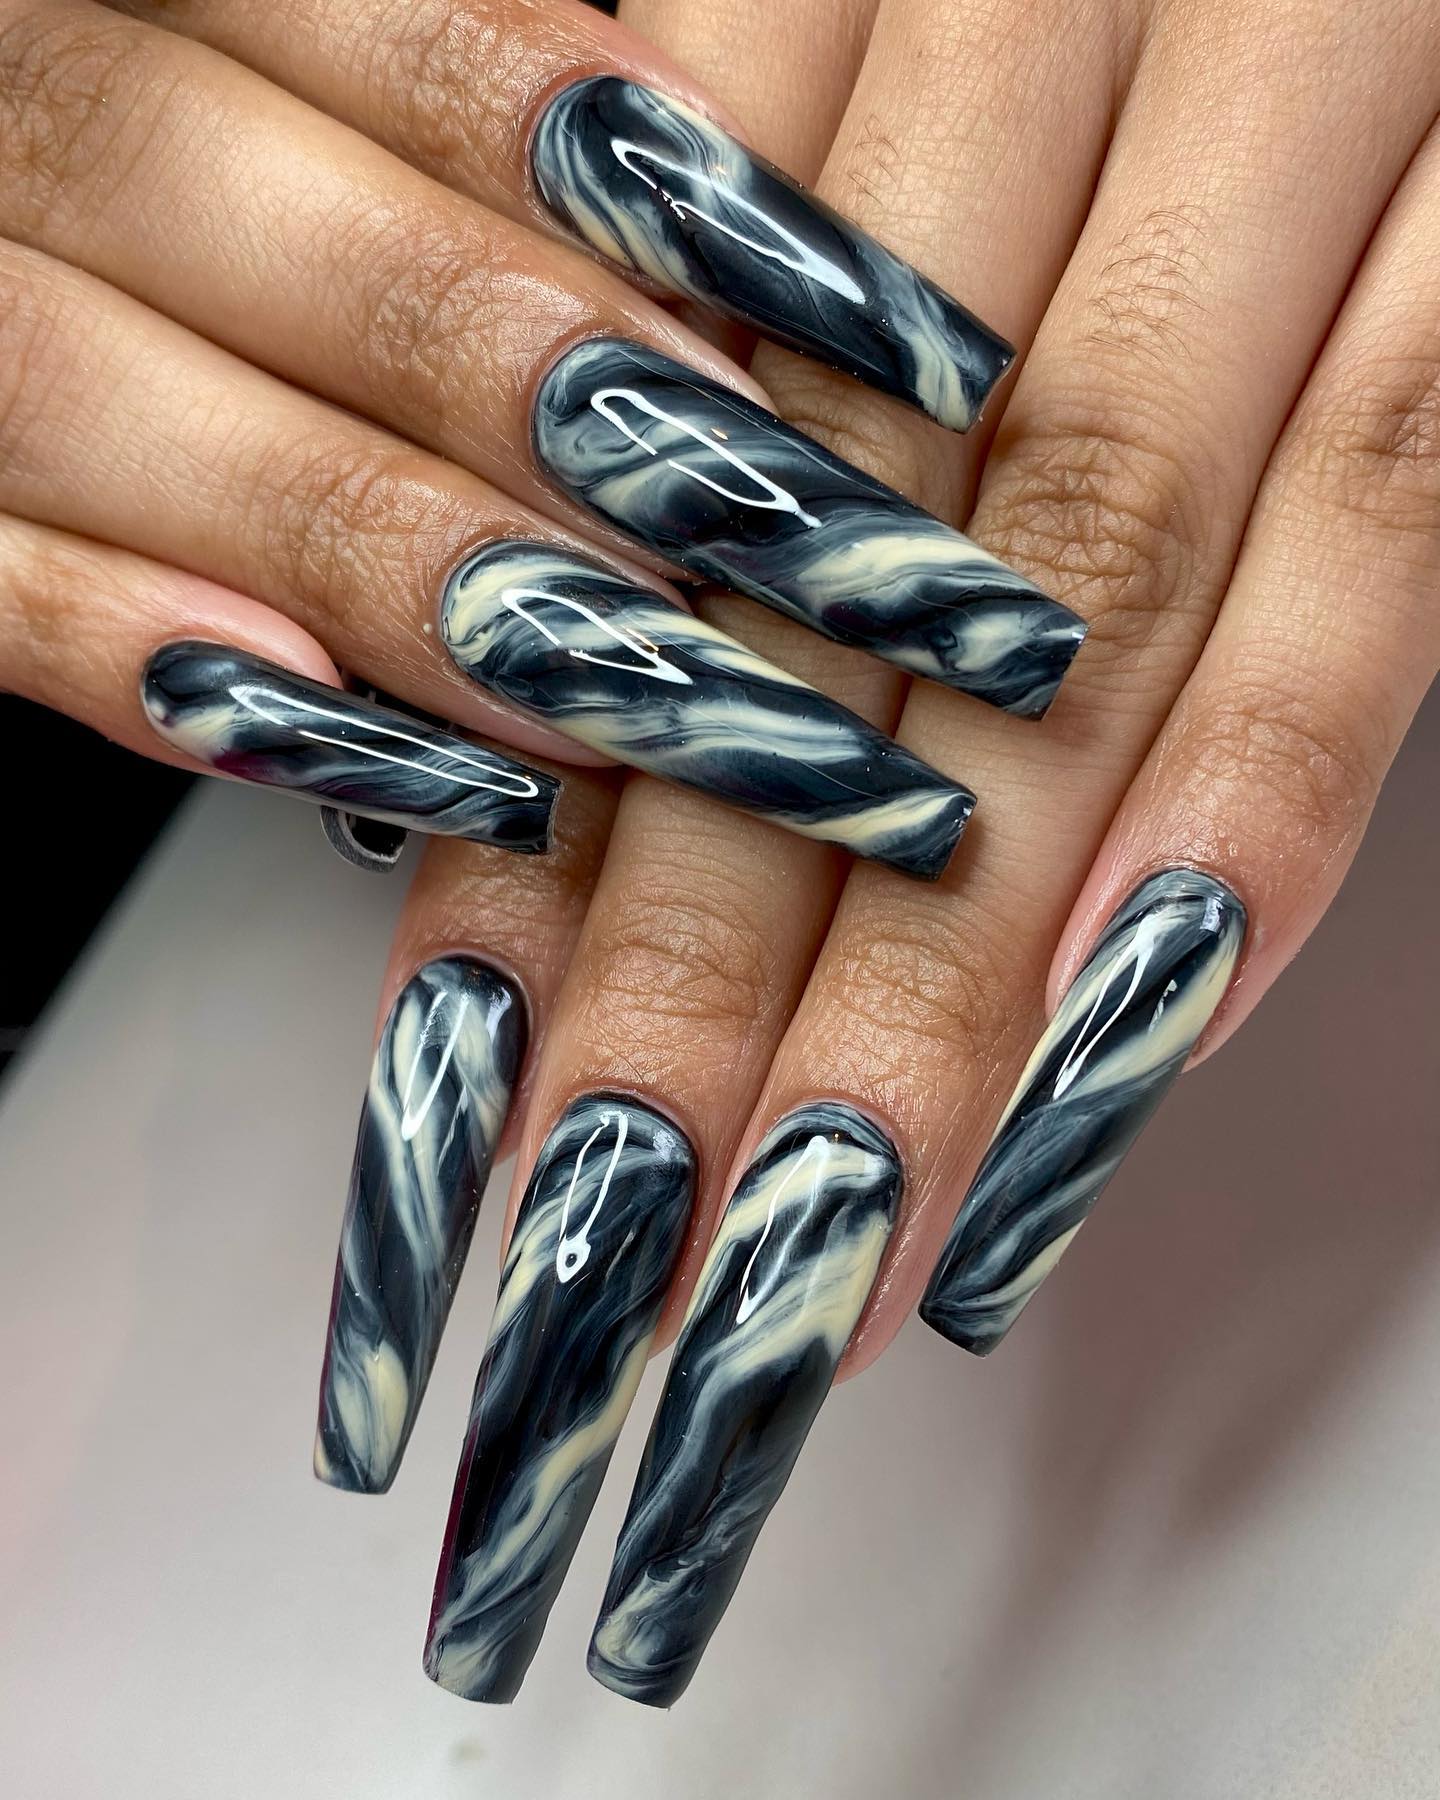 Classy marble acrylic nails - Nails By Anna